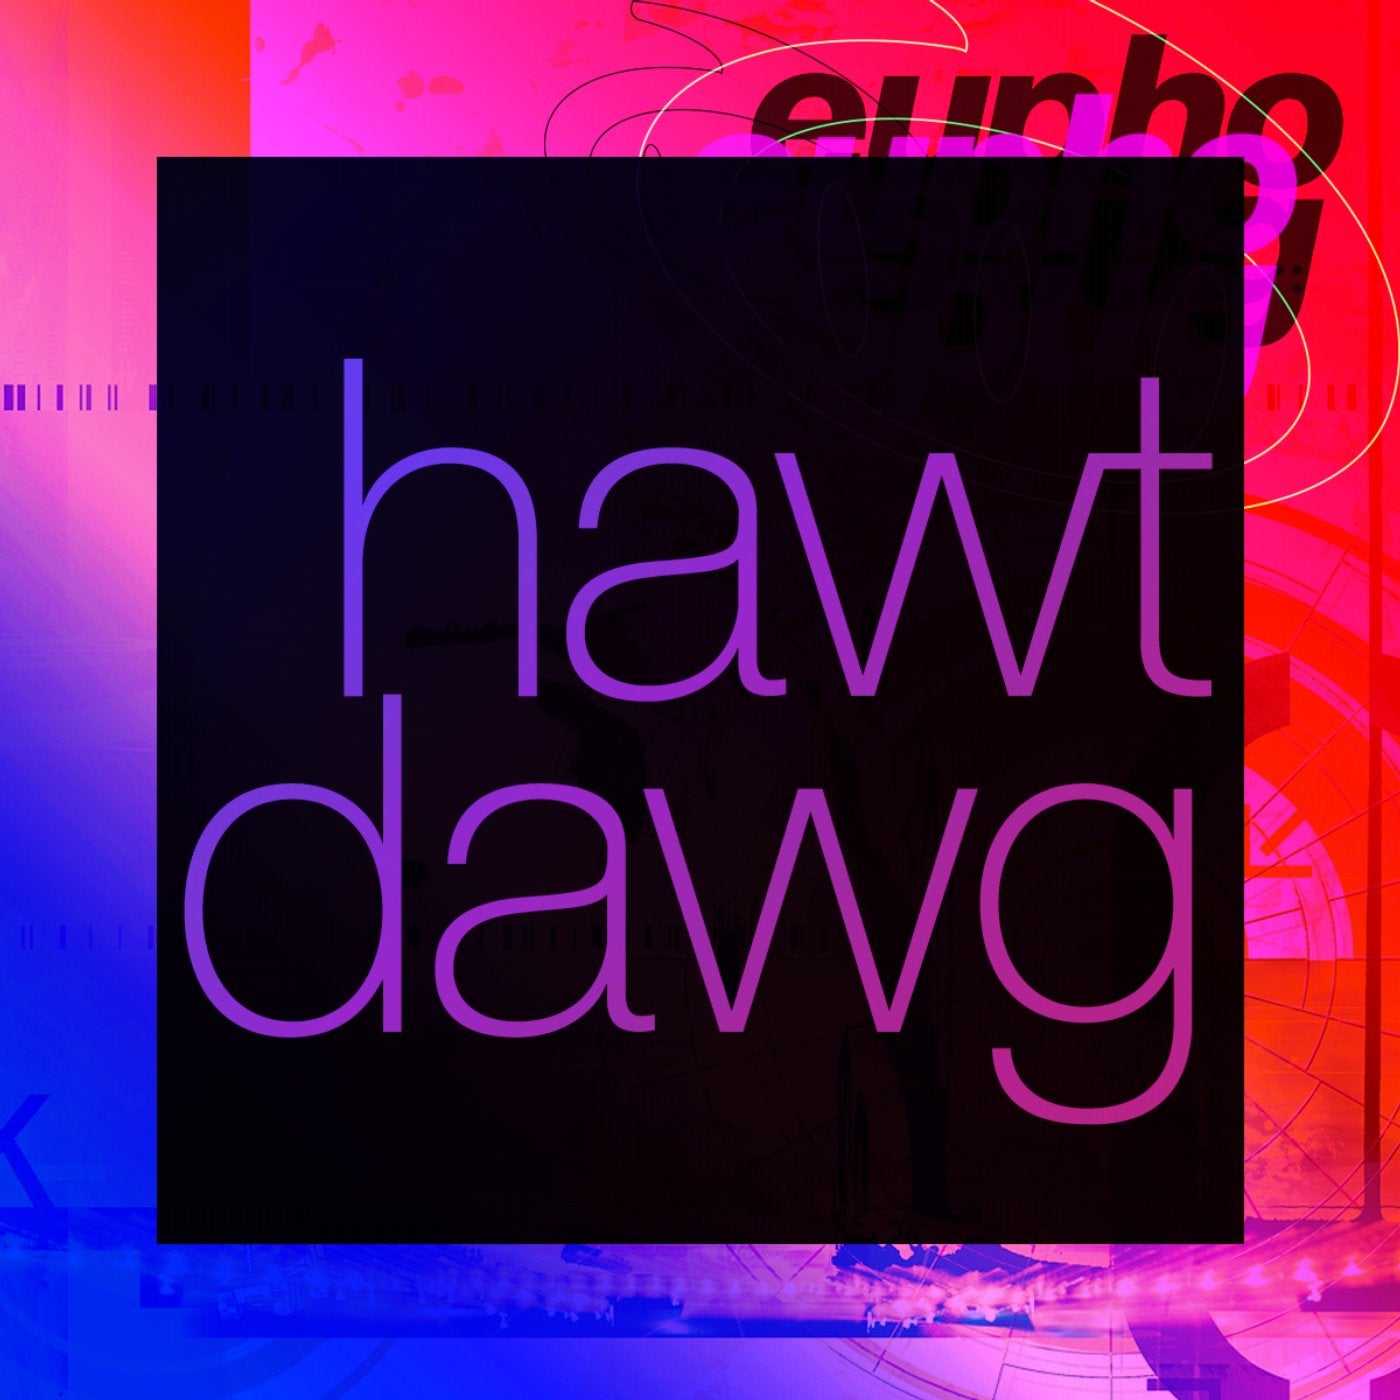 Hawt Dog